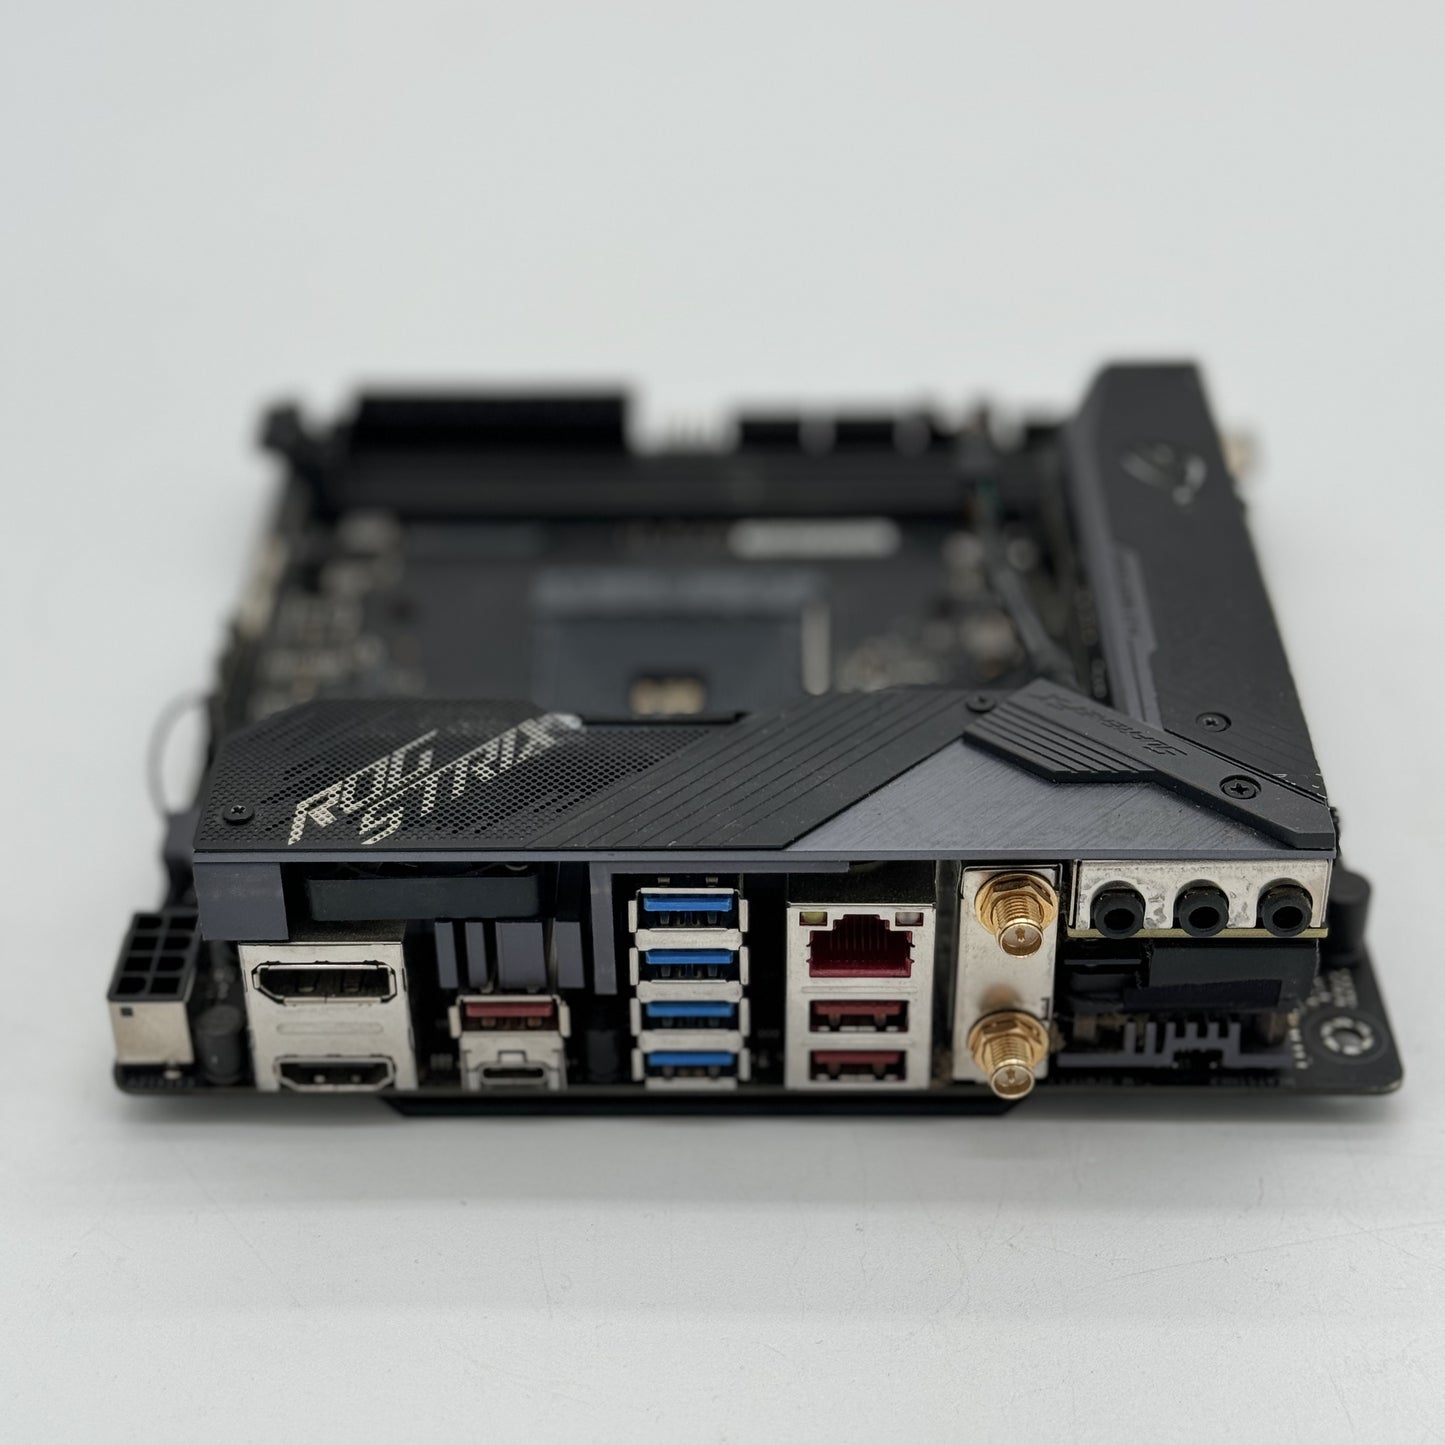 ASUS ROG STRIX X570-I Gaming AM4 Mini-ITX Motherboard